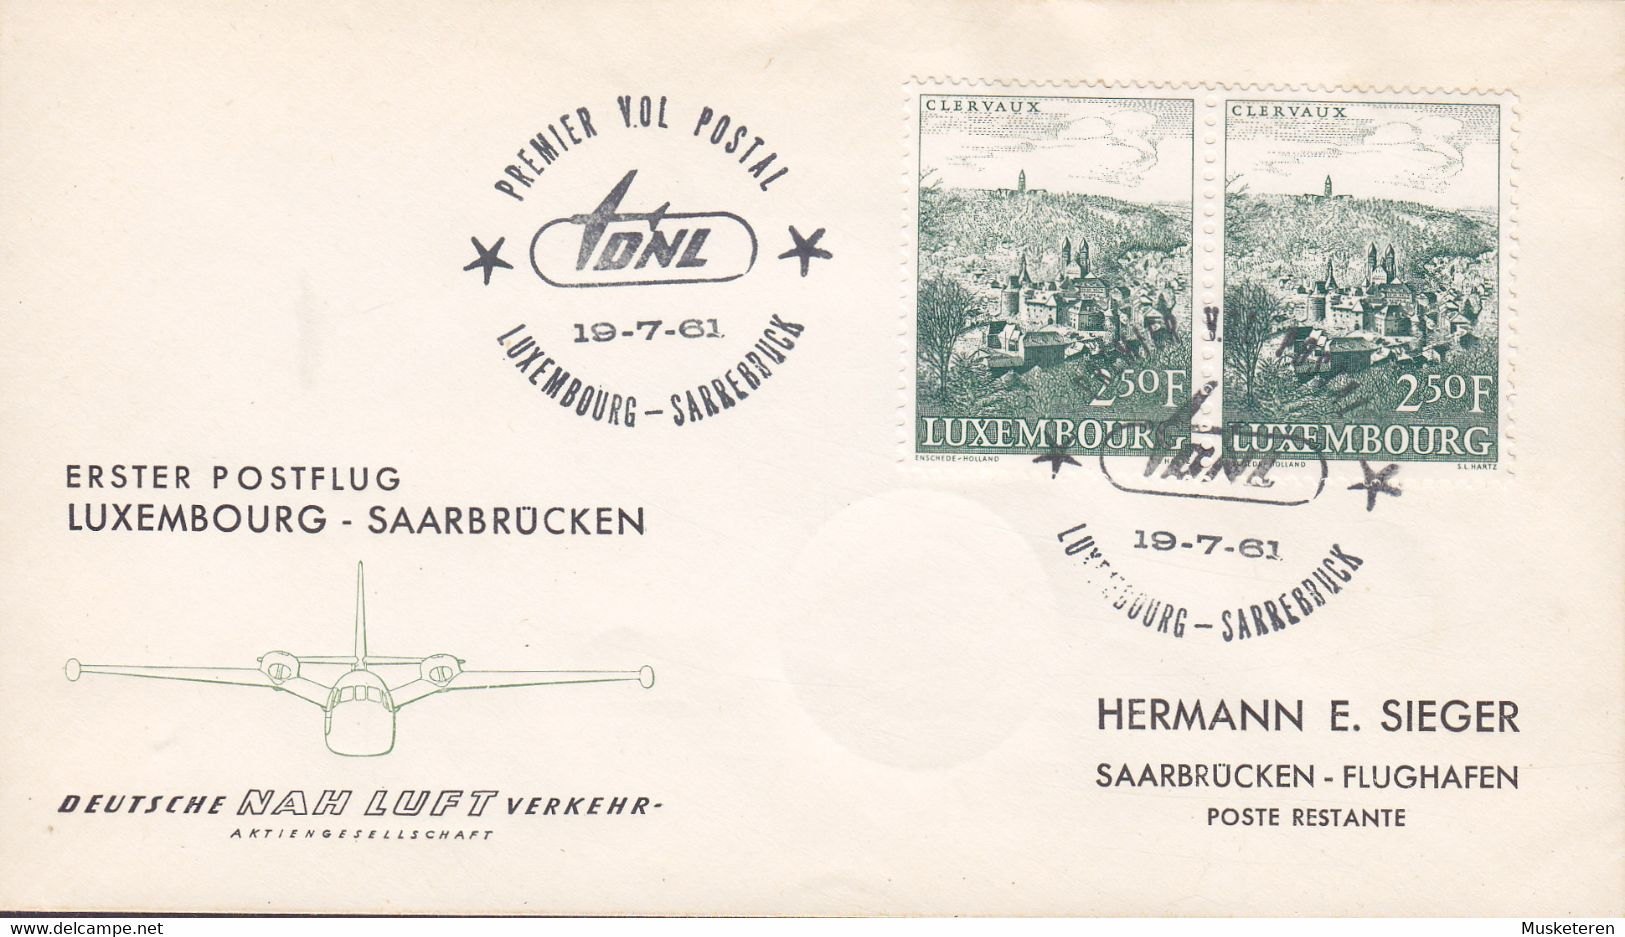 Luxembourg Deutsche NAH LUFT Verkehr First Flight Premiére Vol Postal LUXEMBOURG - SAARBRÜCKEN 1961 Cover Lettre - Covers & Documents